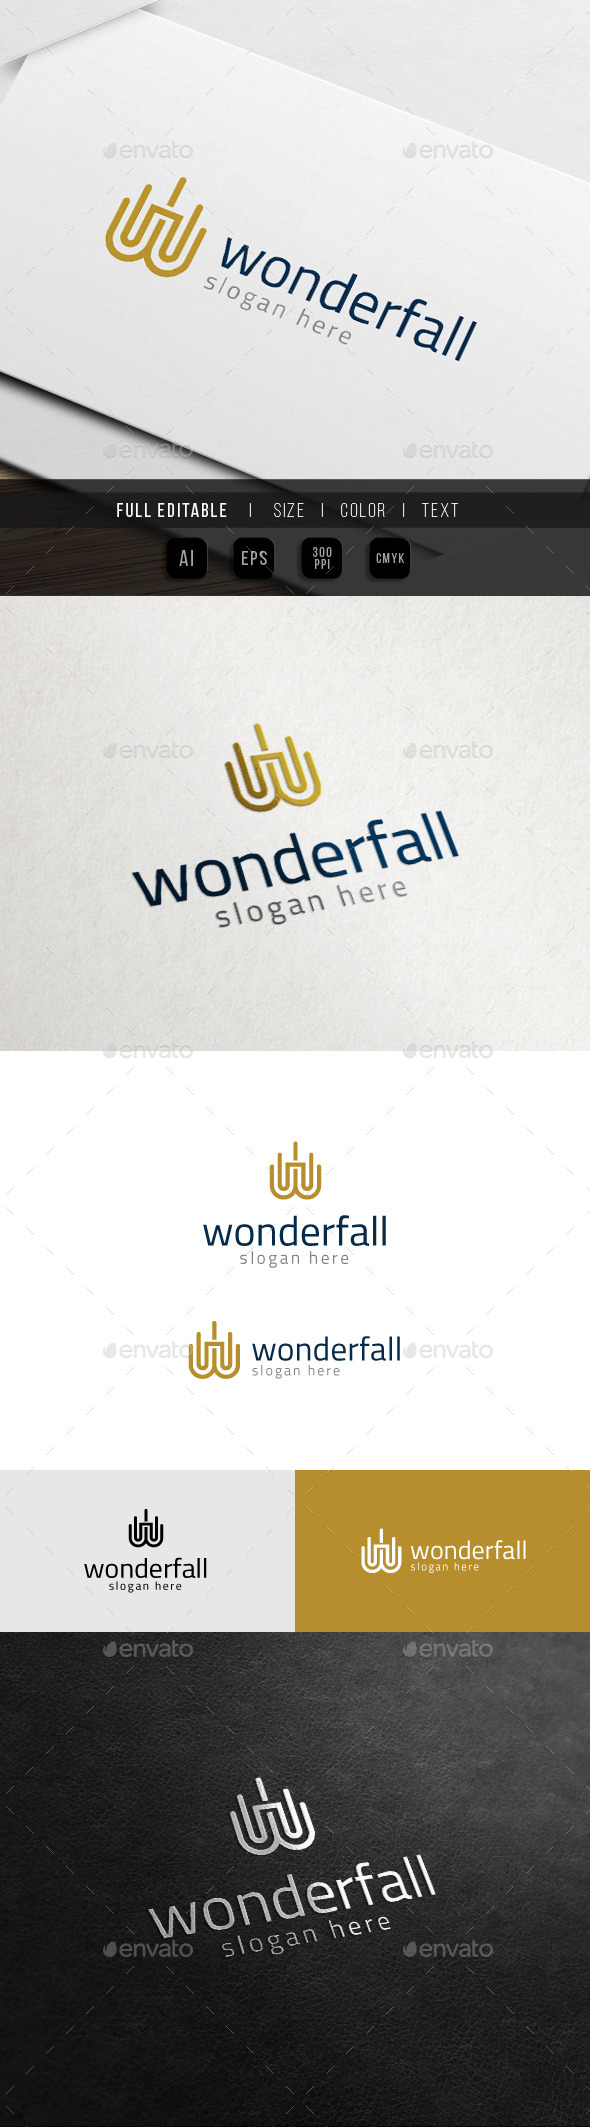 Wonderfall - Letter W Logo